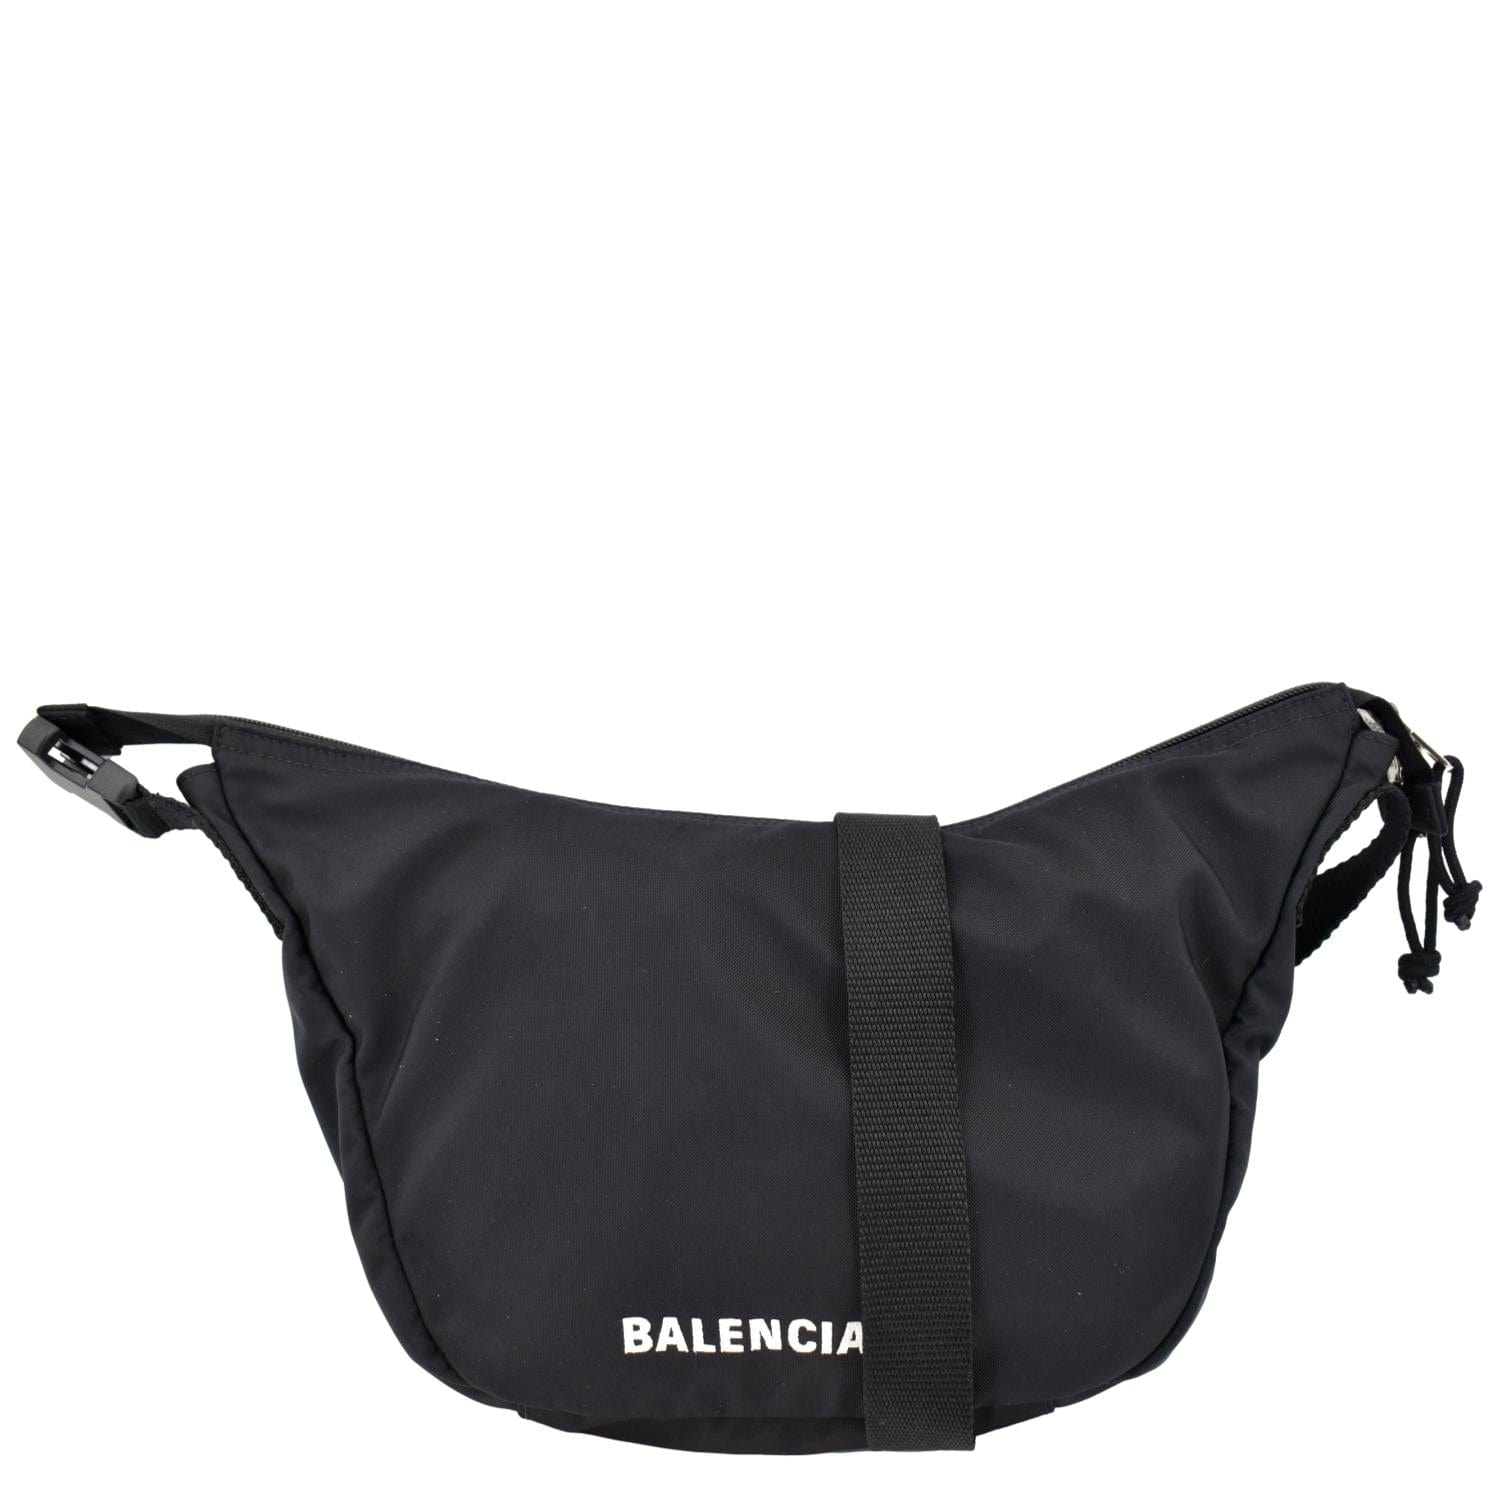 Balenciaga Wheel Sling Bag in Black & White